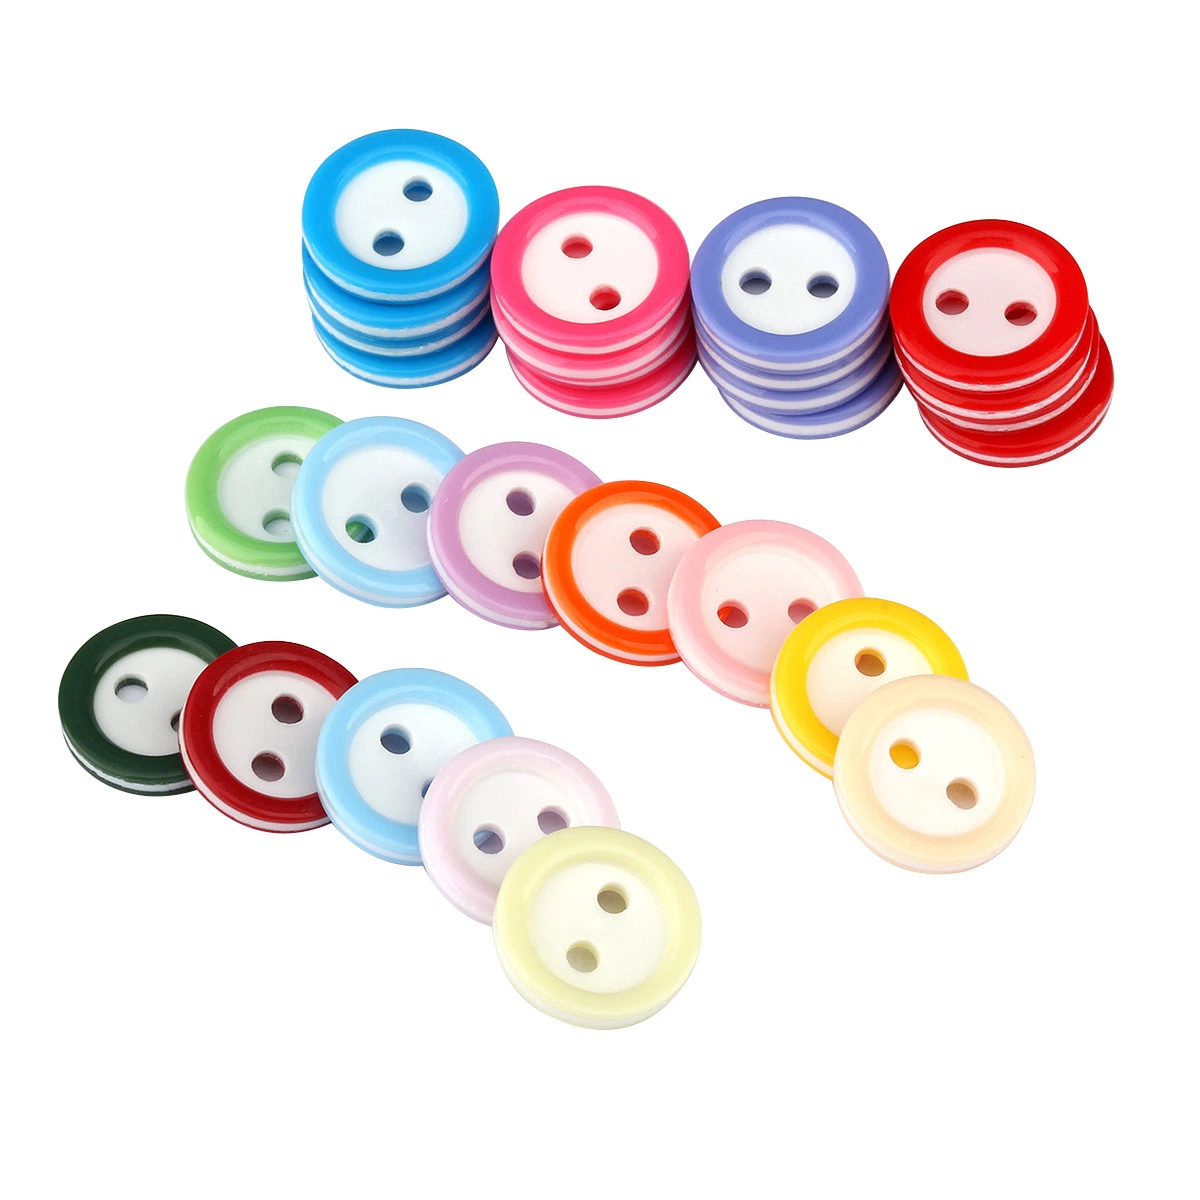 Colour Button 18L Two-Hole Multi-Layer Button DIY Handmade Button Accessories